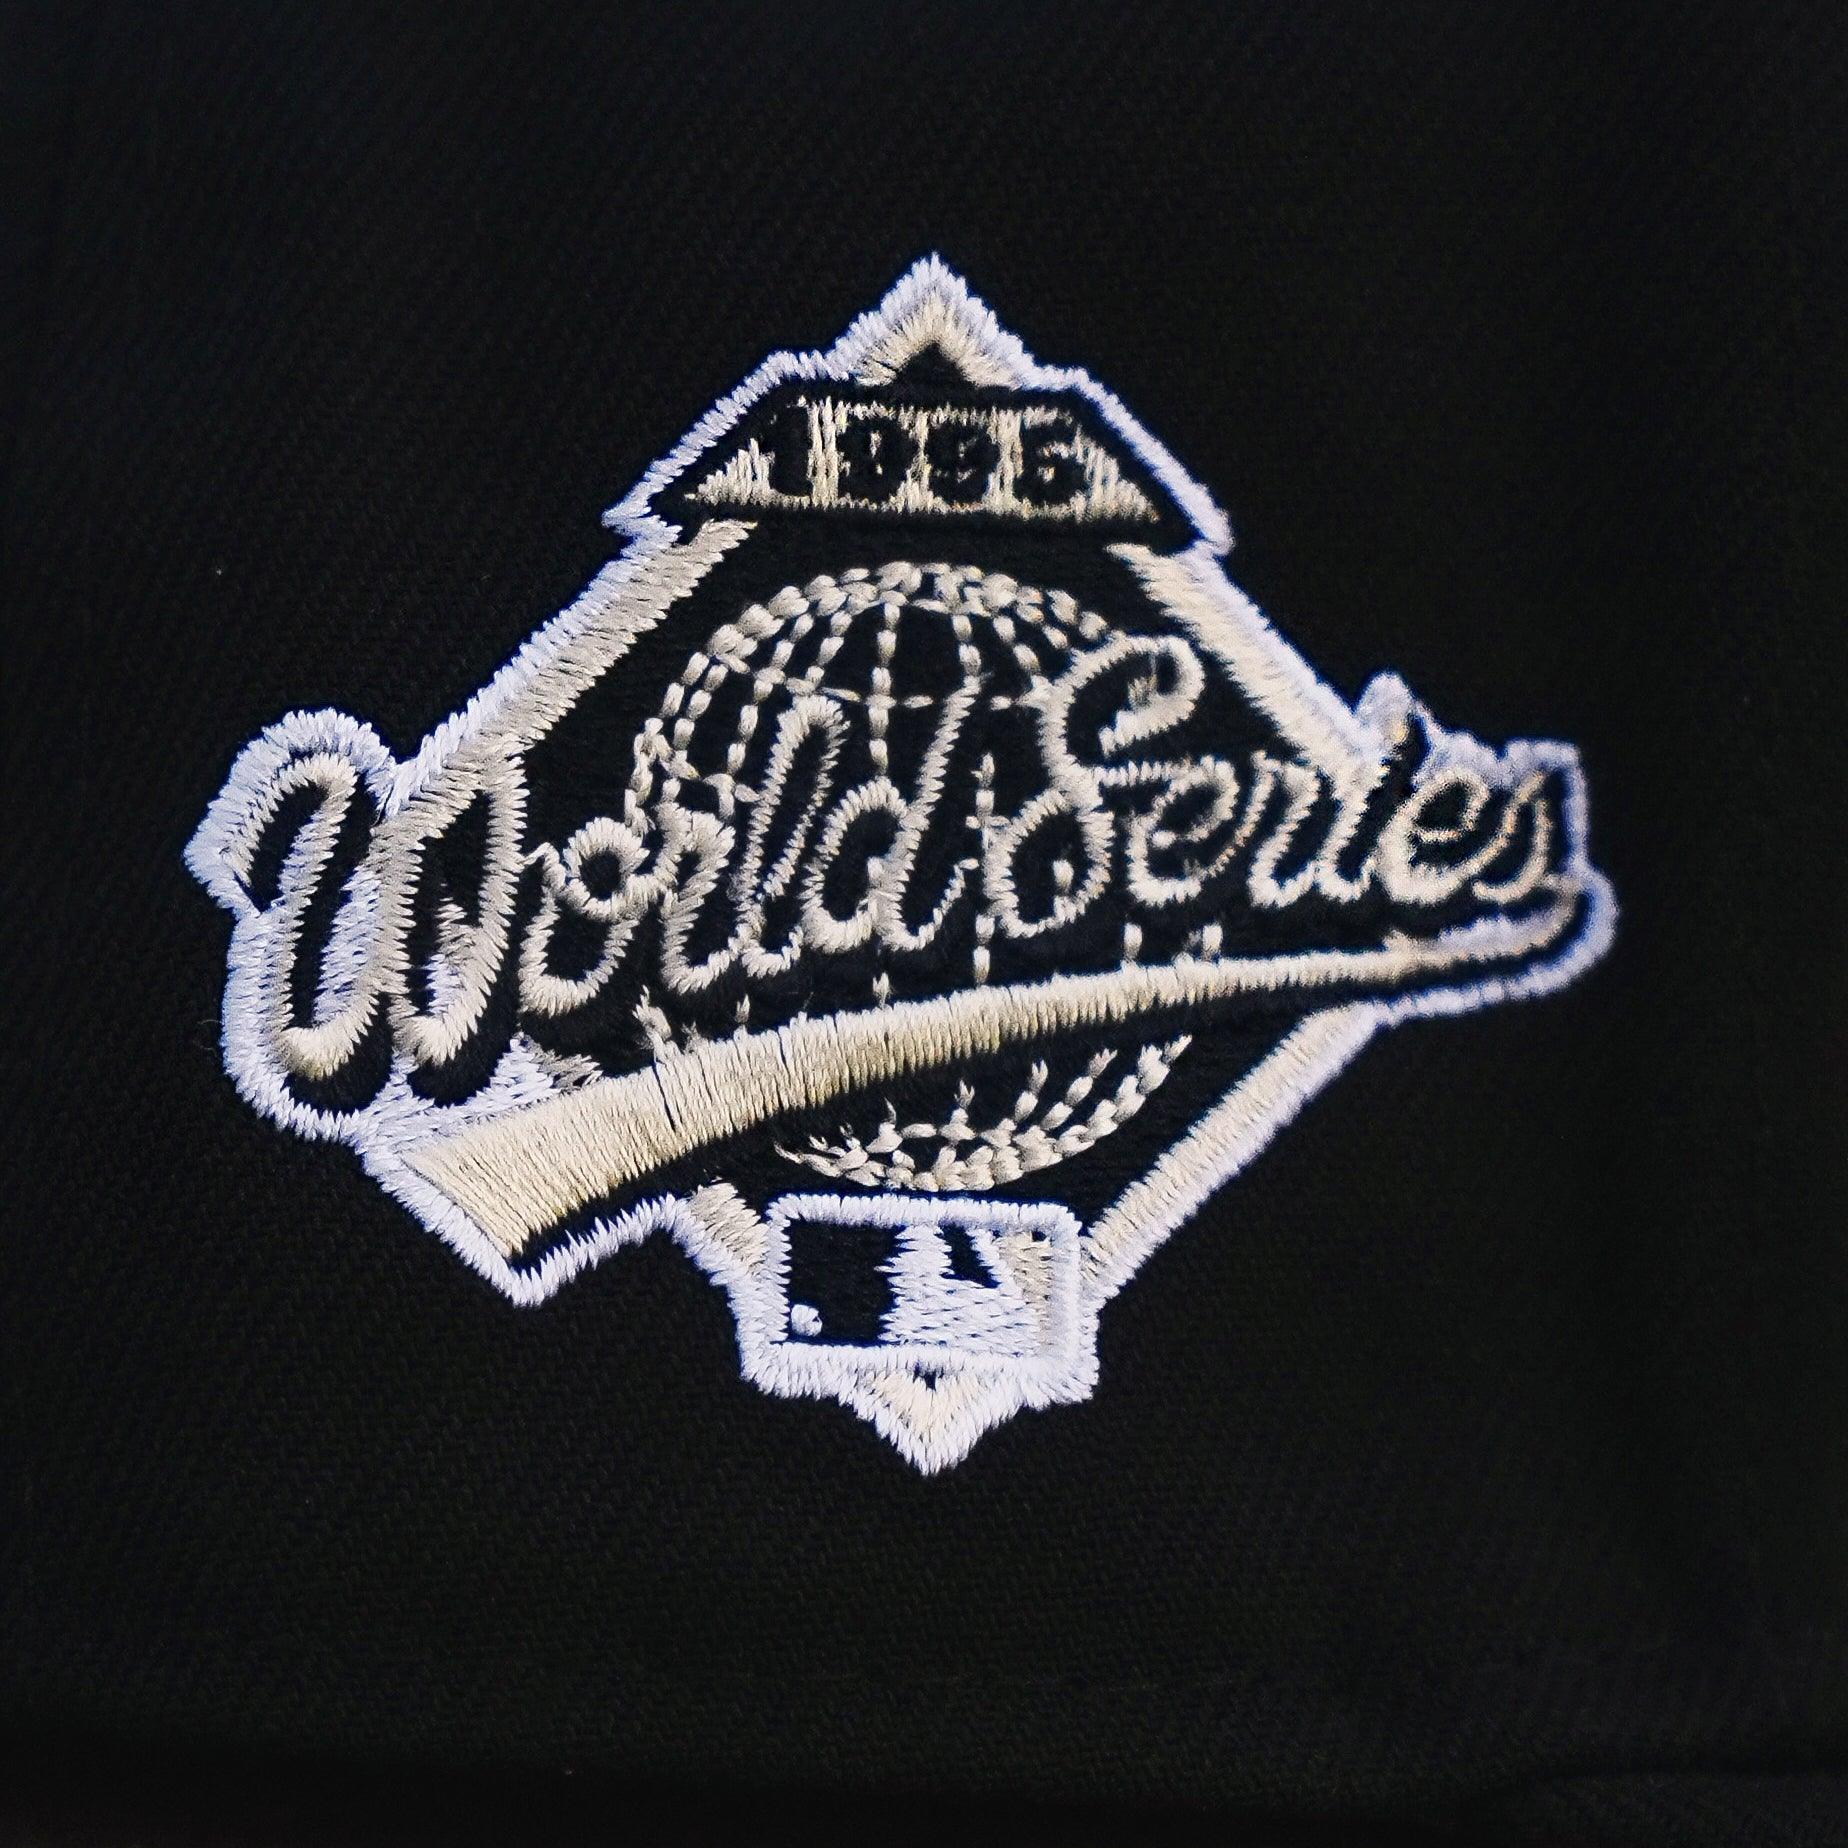 MLB 4.5 x 3.5 1995 World Series Patch